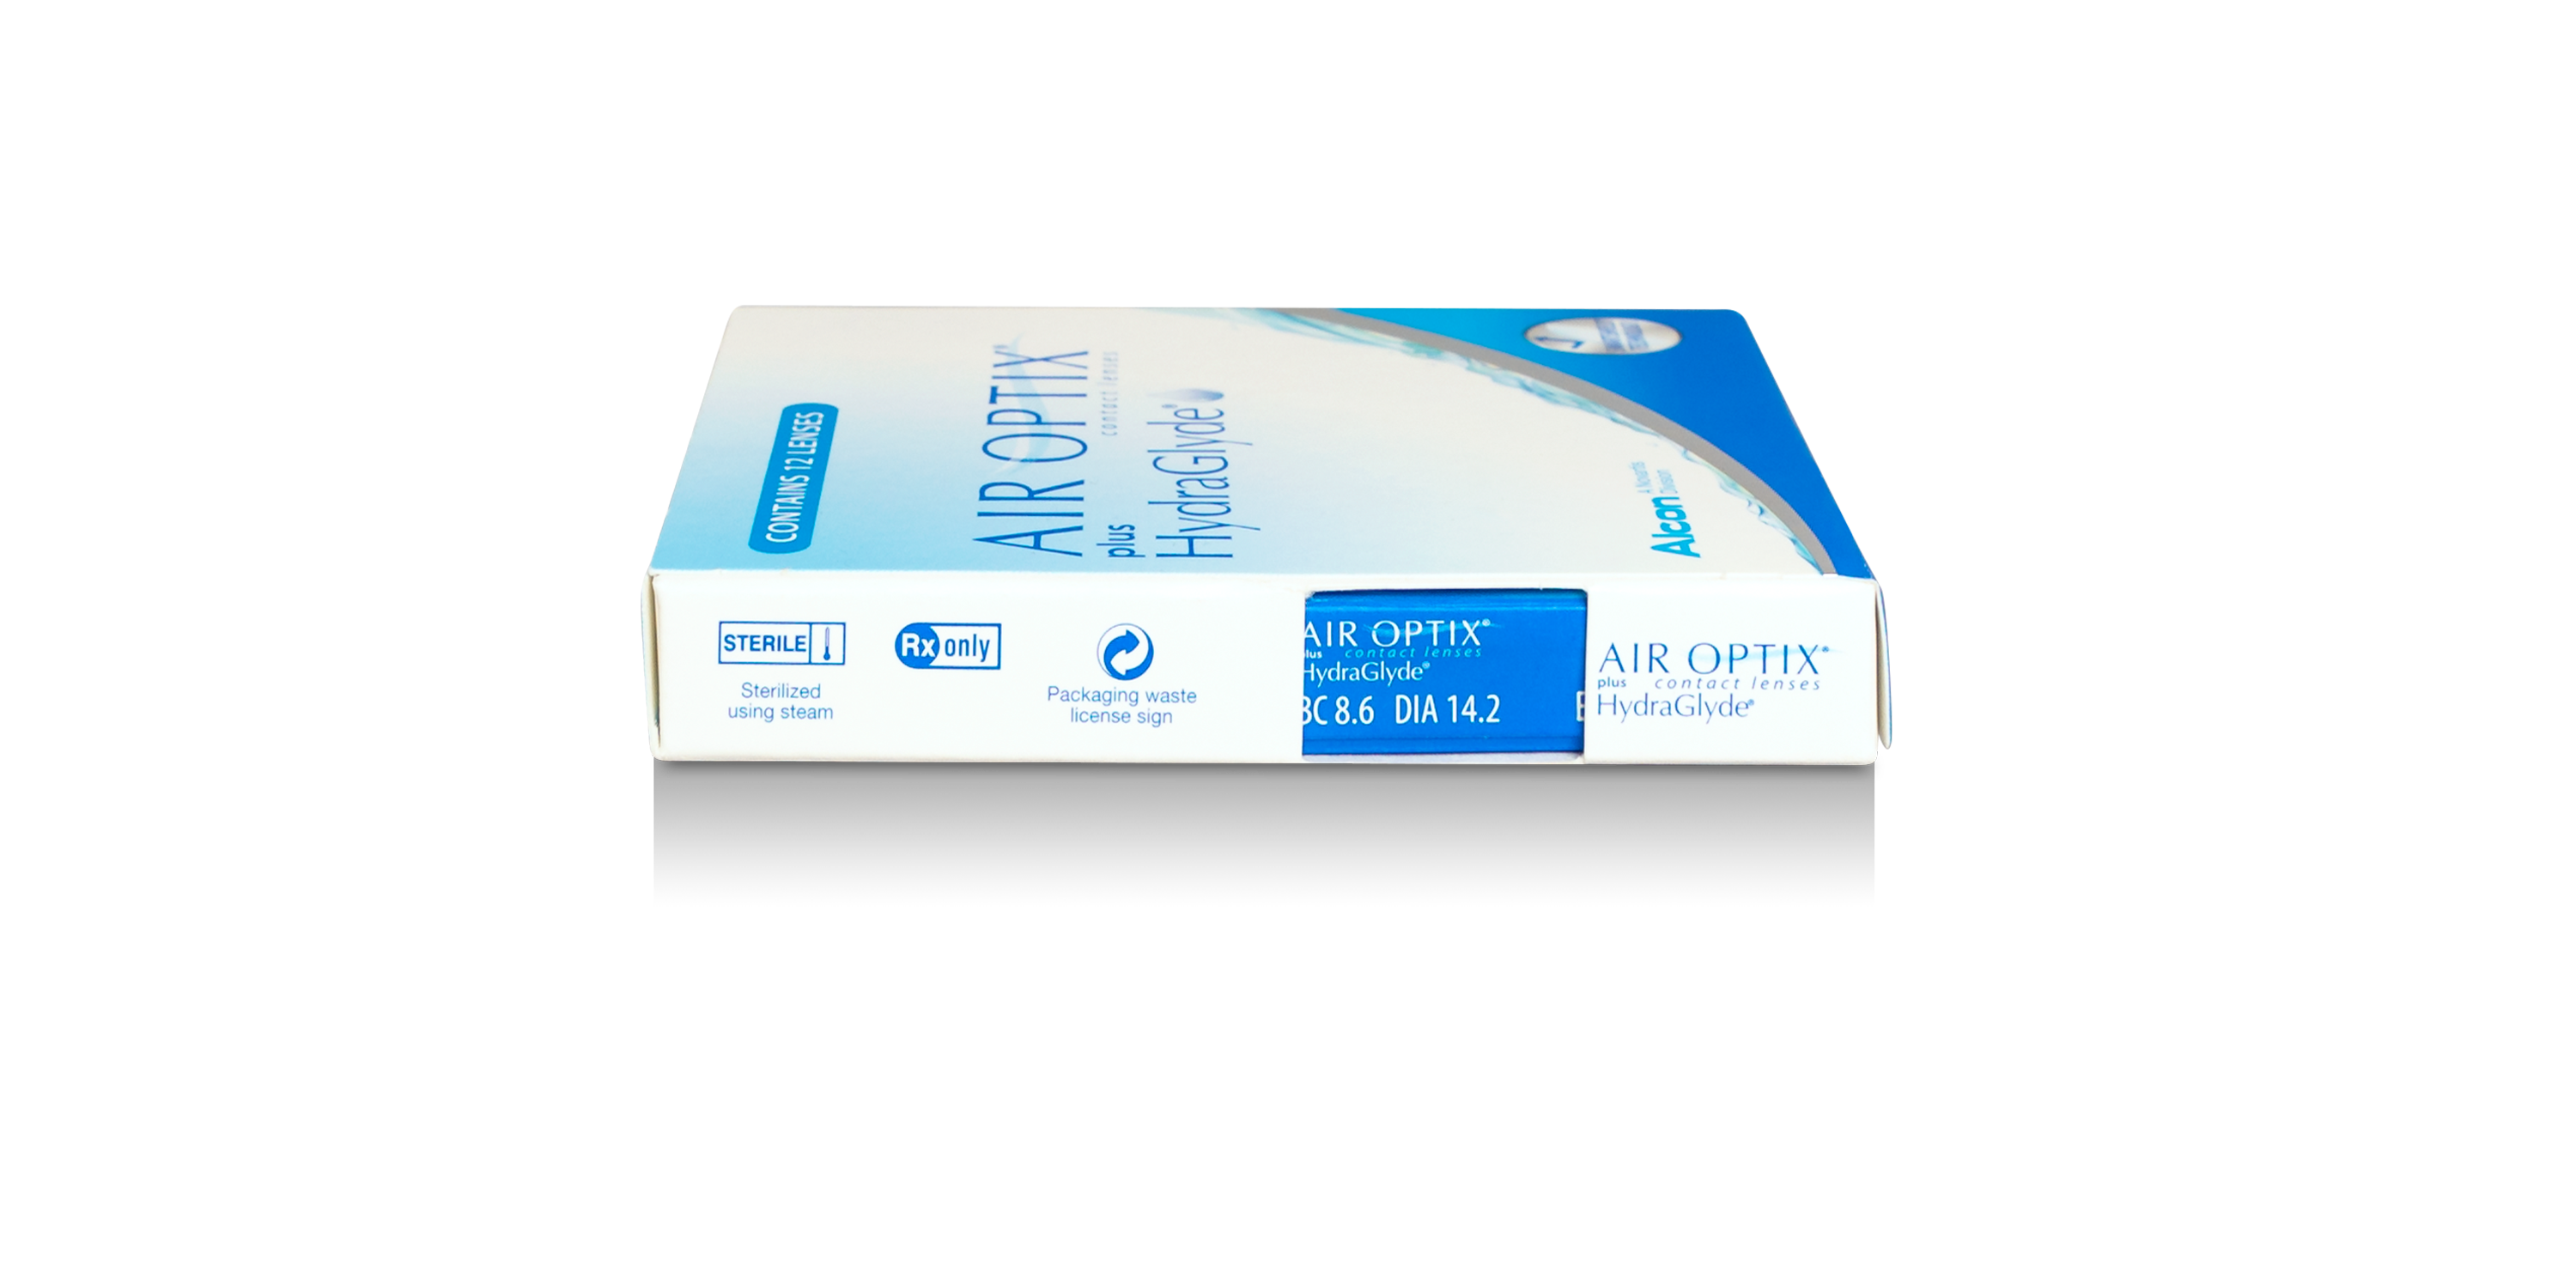 AIR OPTIX® Plus HydraGlyde® - 12 Pack